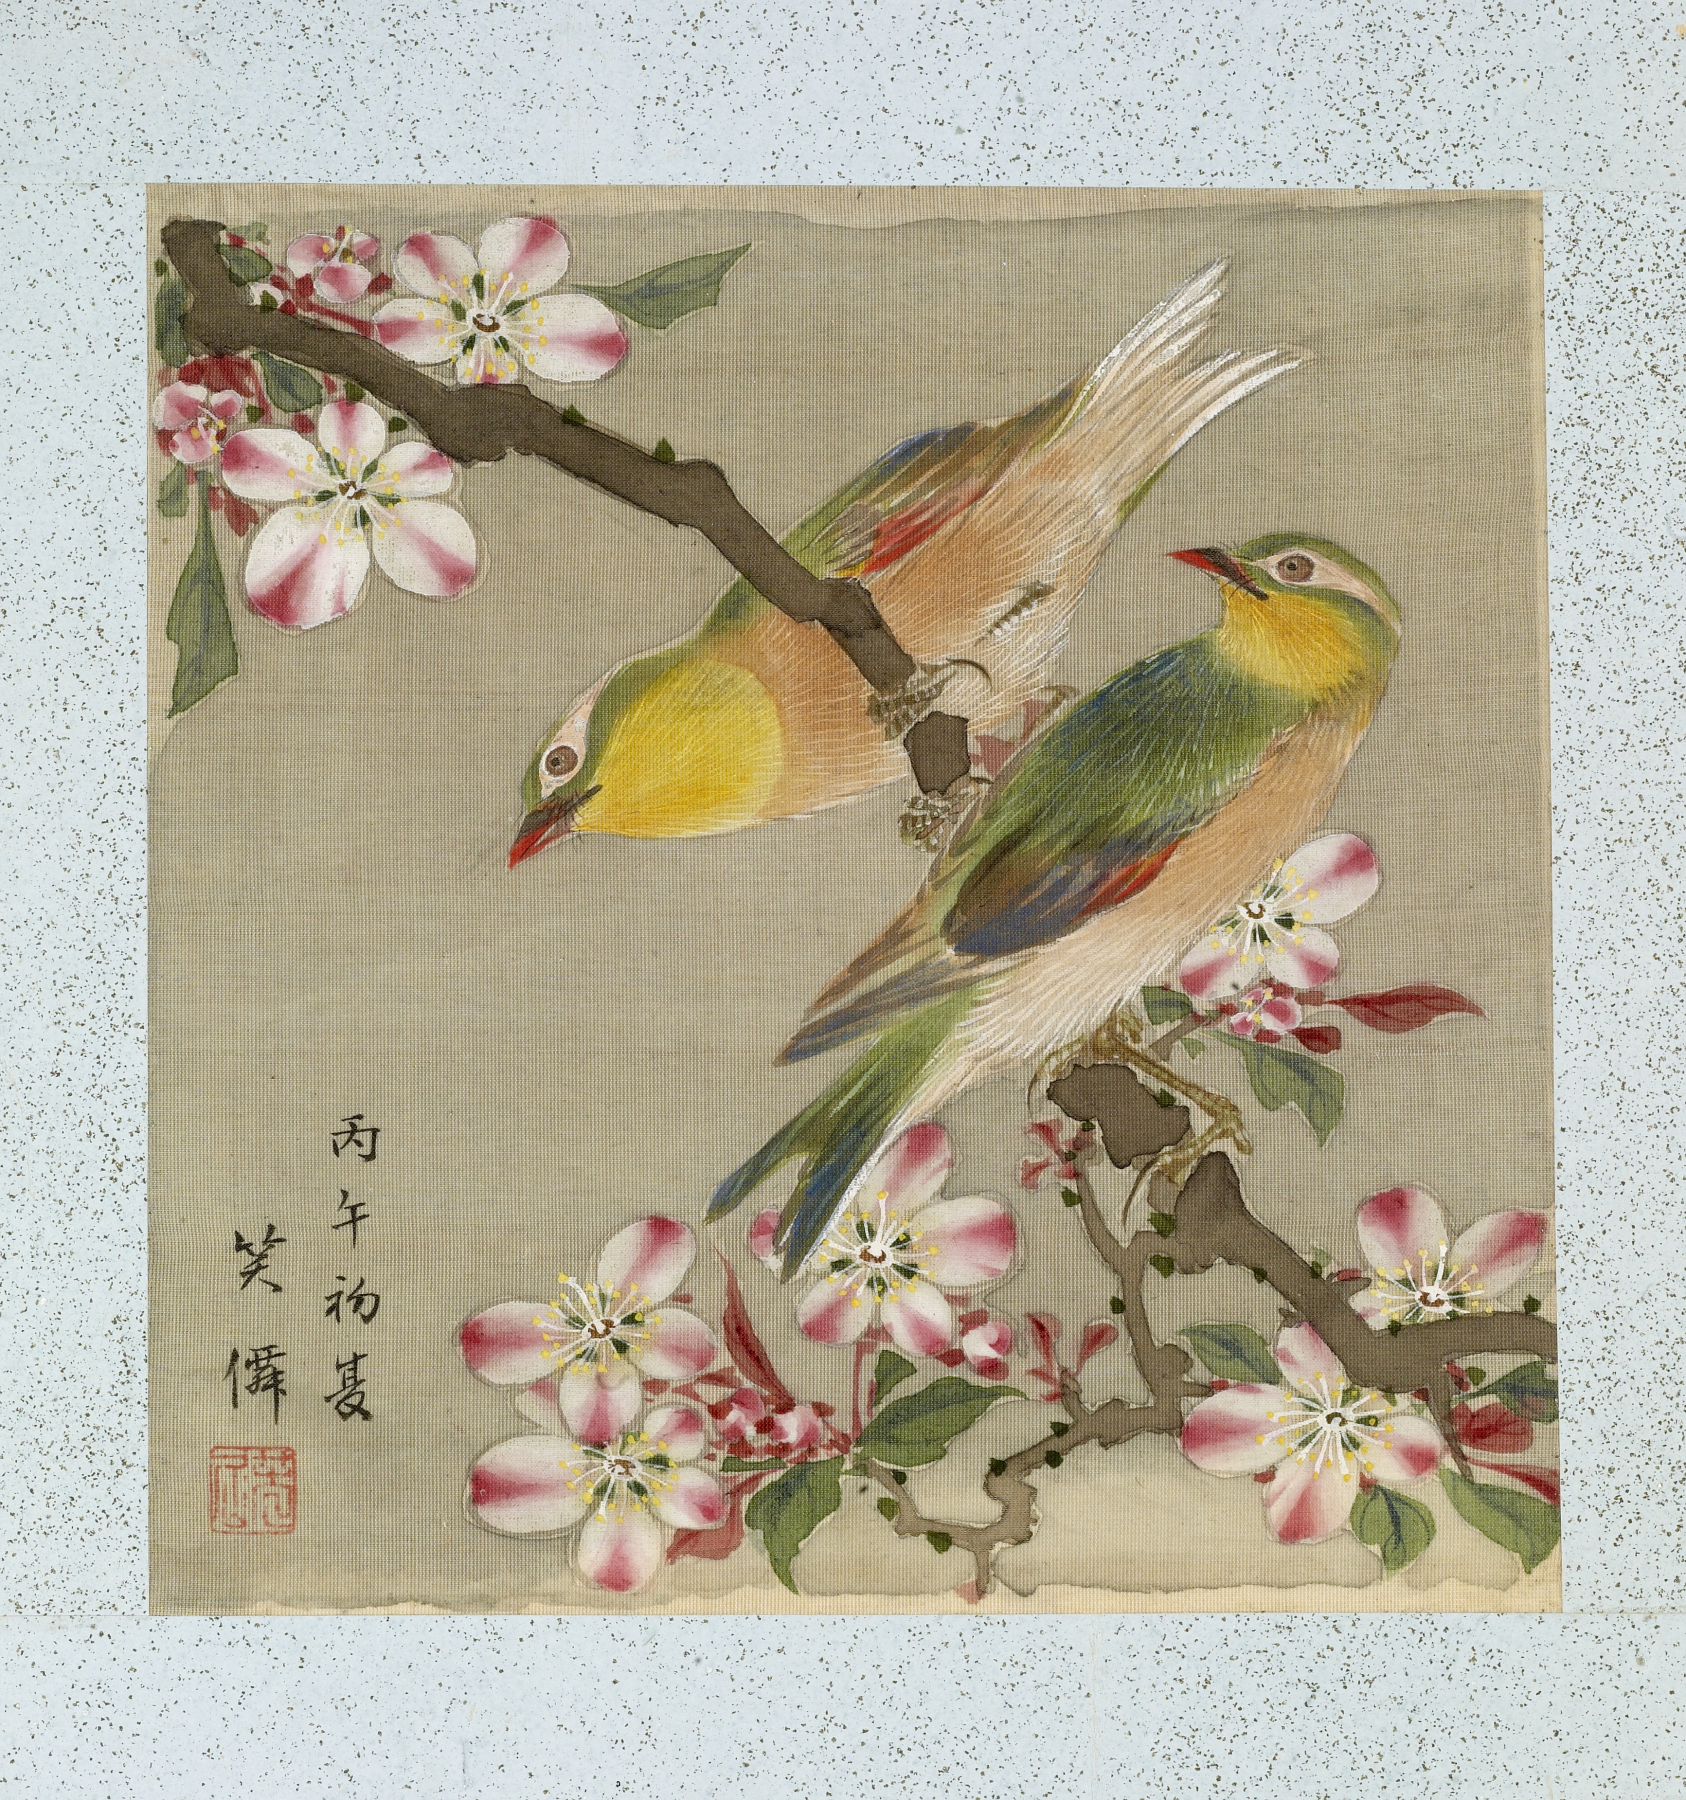 Image for Leaf from Album Depicting Birds, Flowers, Landscapes, and Flower Pots